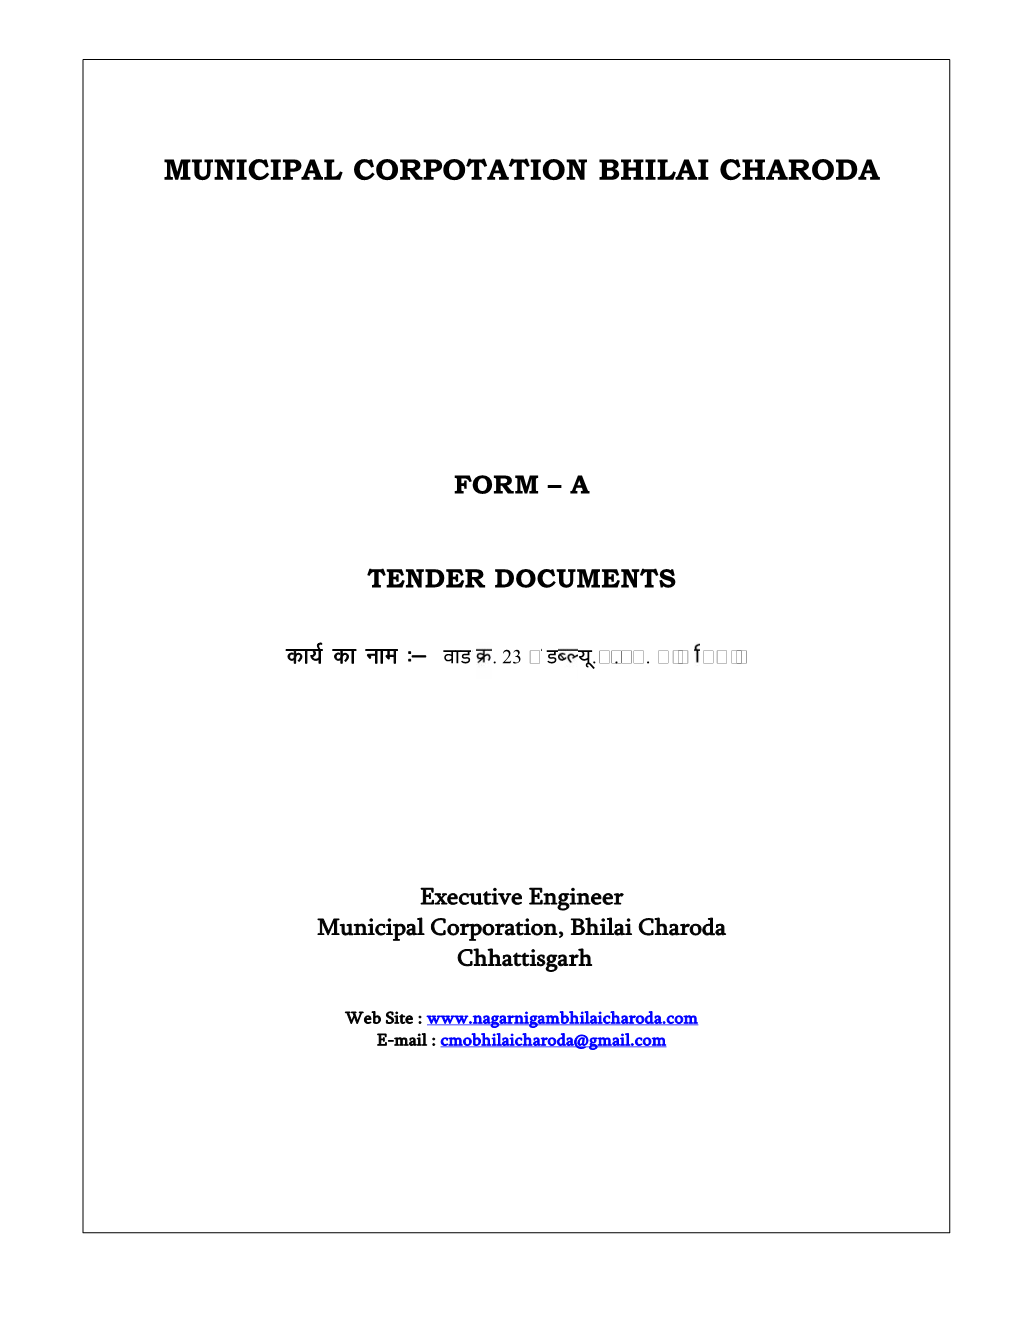 Municipal Corpotation Bhilai Charoda